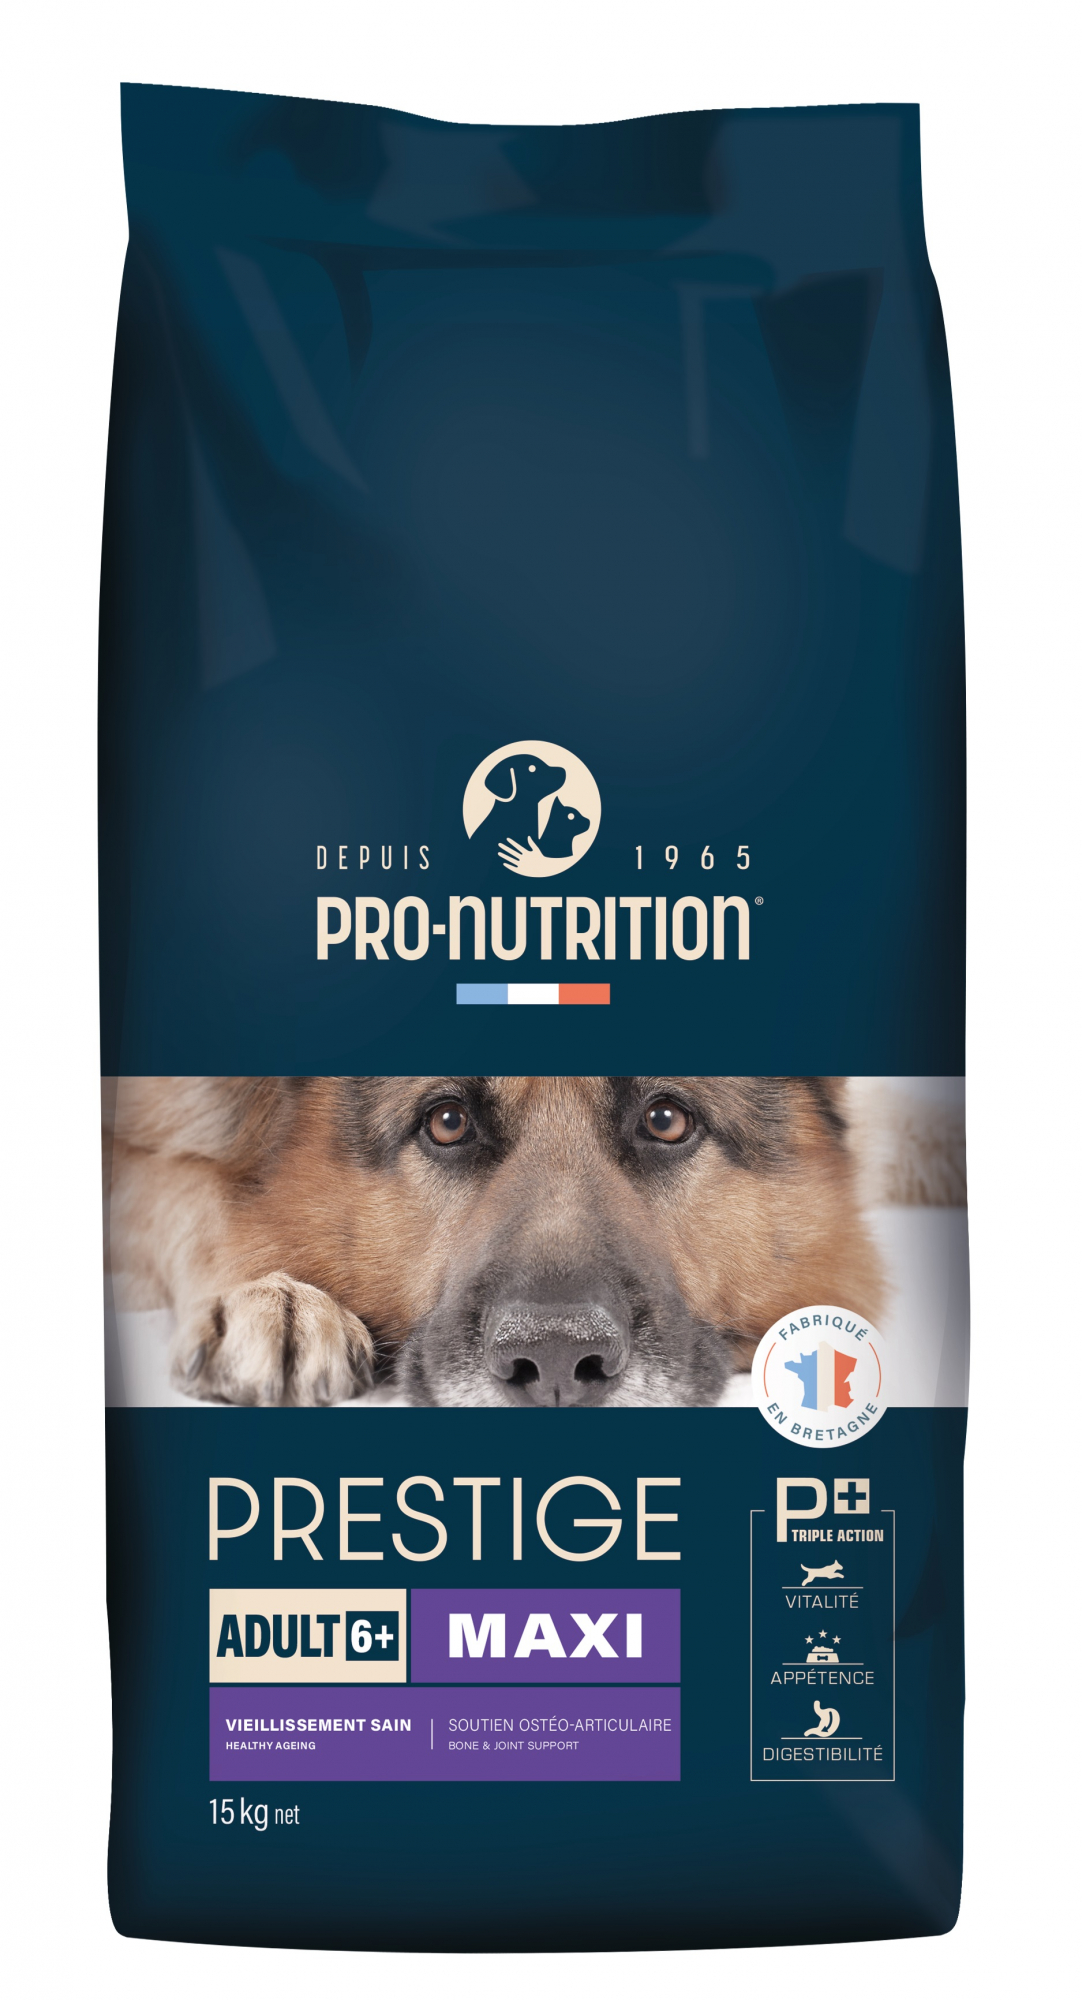 PRO-NUTRITION Flatazor PRESTIGE Adult Maxi 6+ mit Geflügel für grosse ältere Hunde